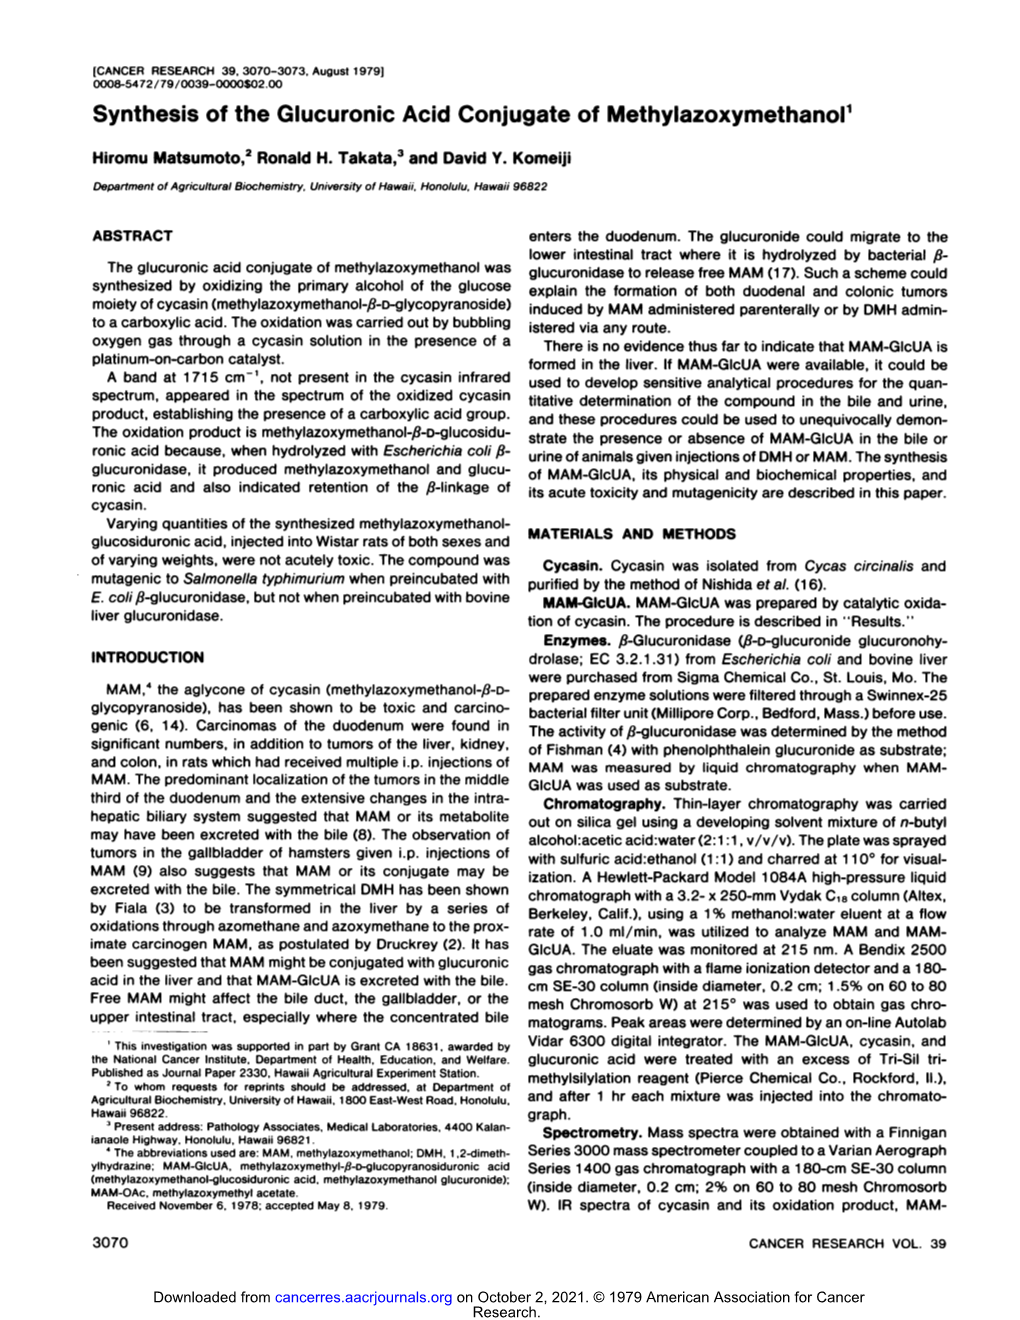 Synthesis of the Glucuronic Acid Conjugate of Methylazoxymethanol'